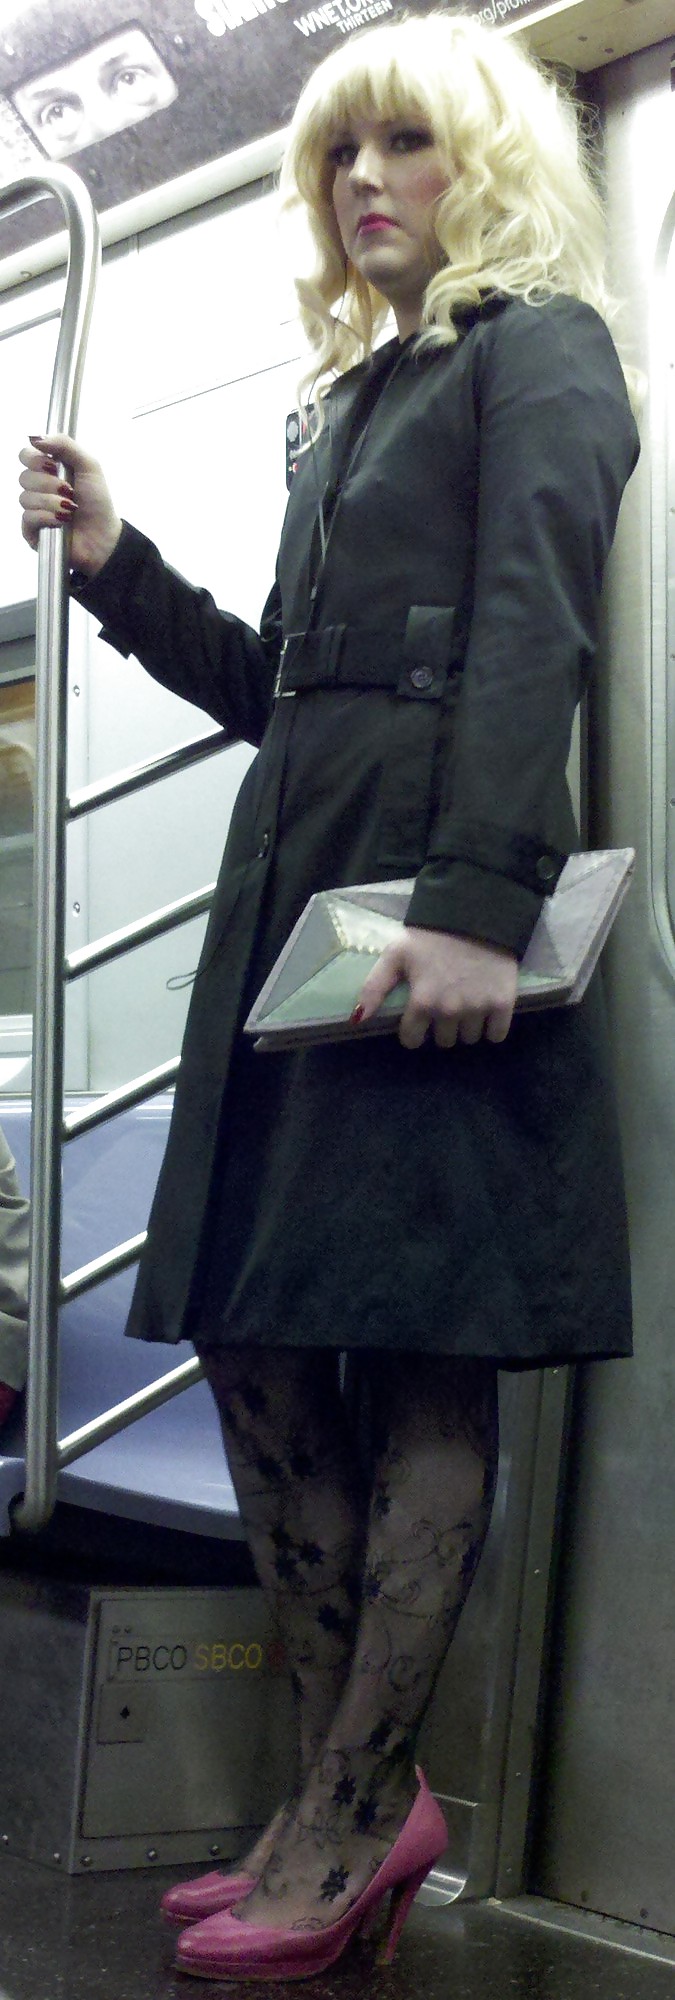 New York Subway Girls 107 Dude Looks Like a Lady #6603898